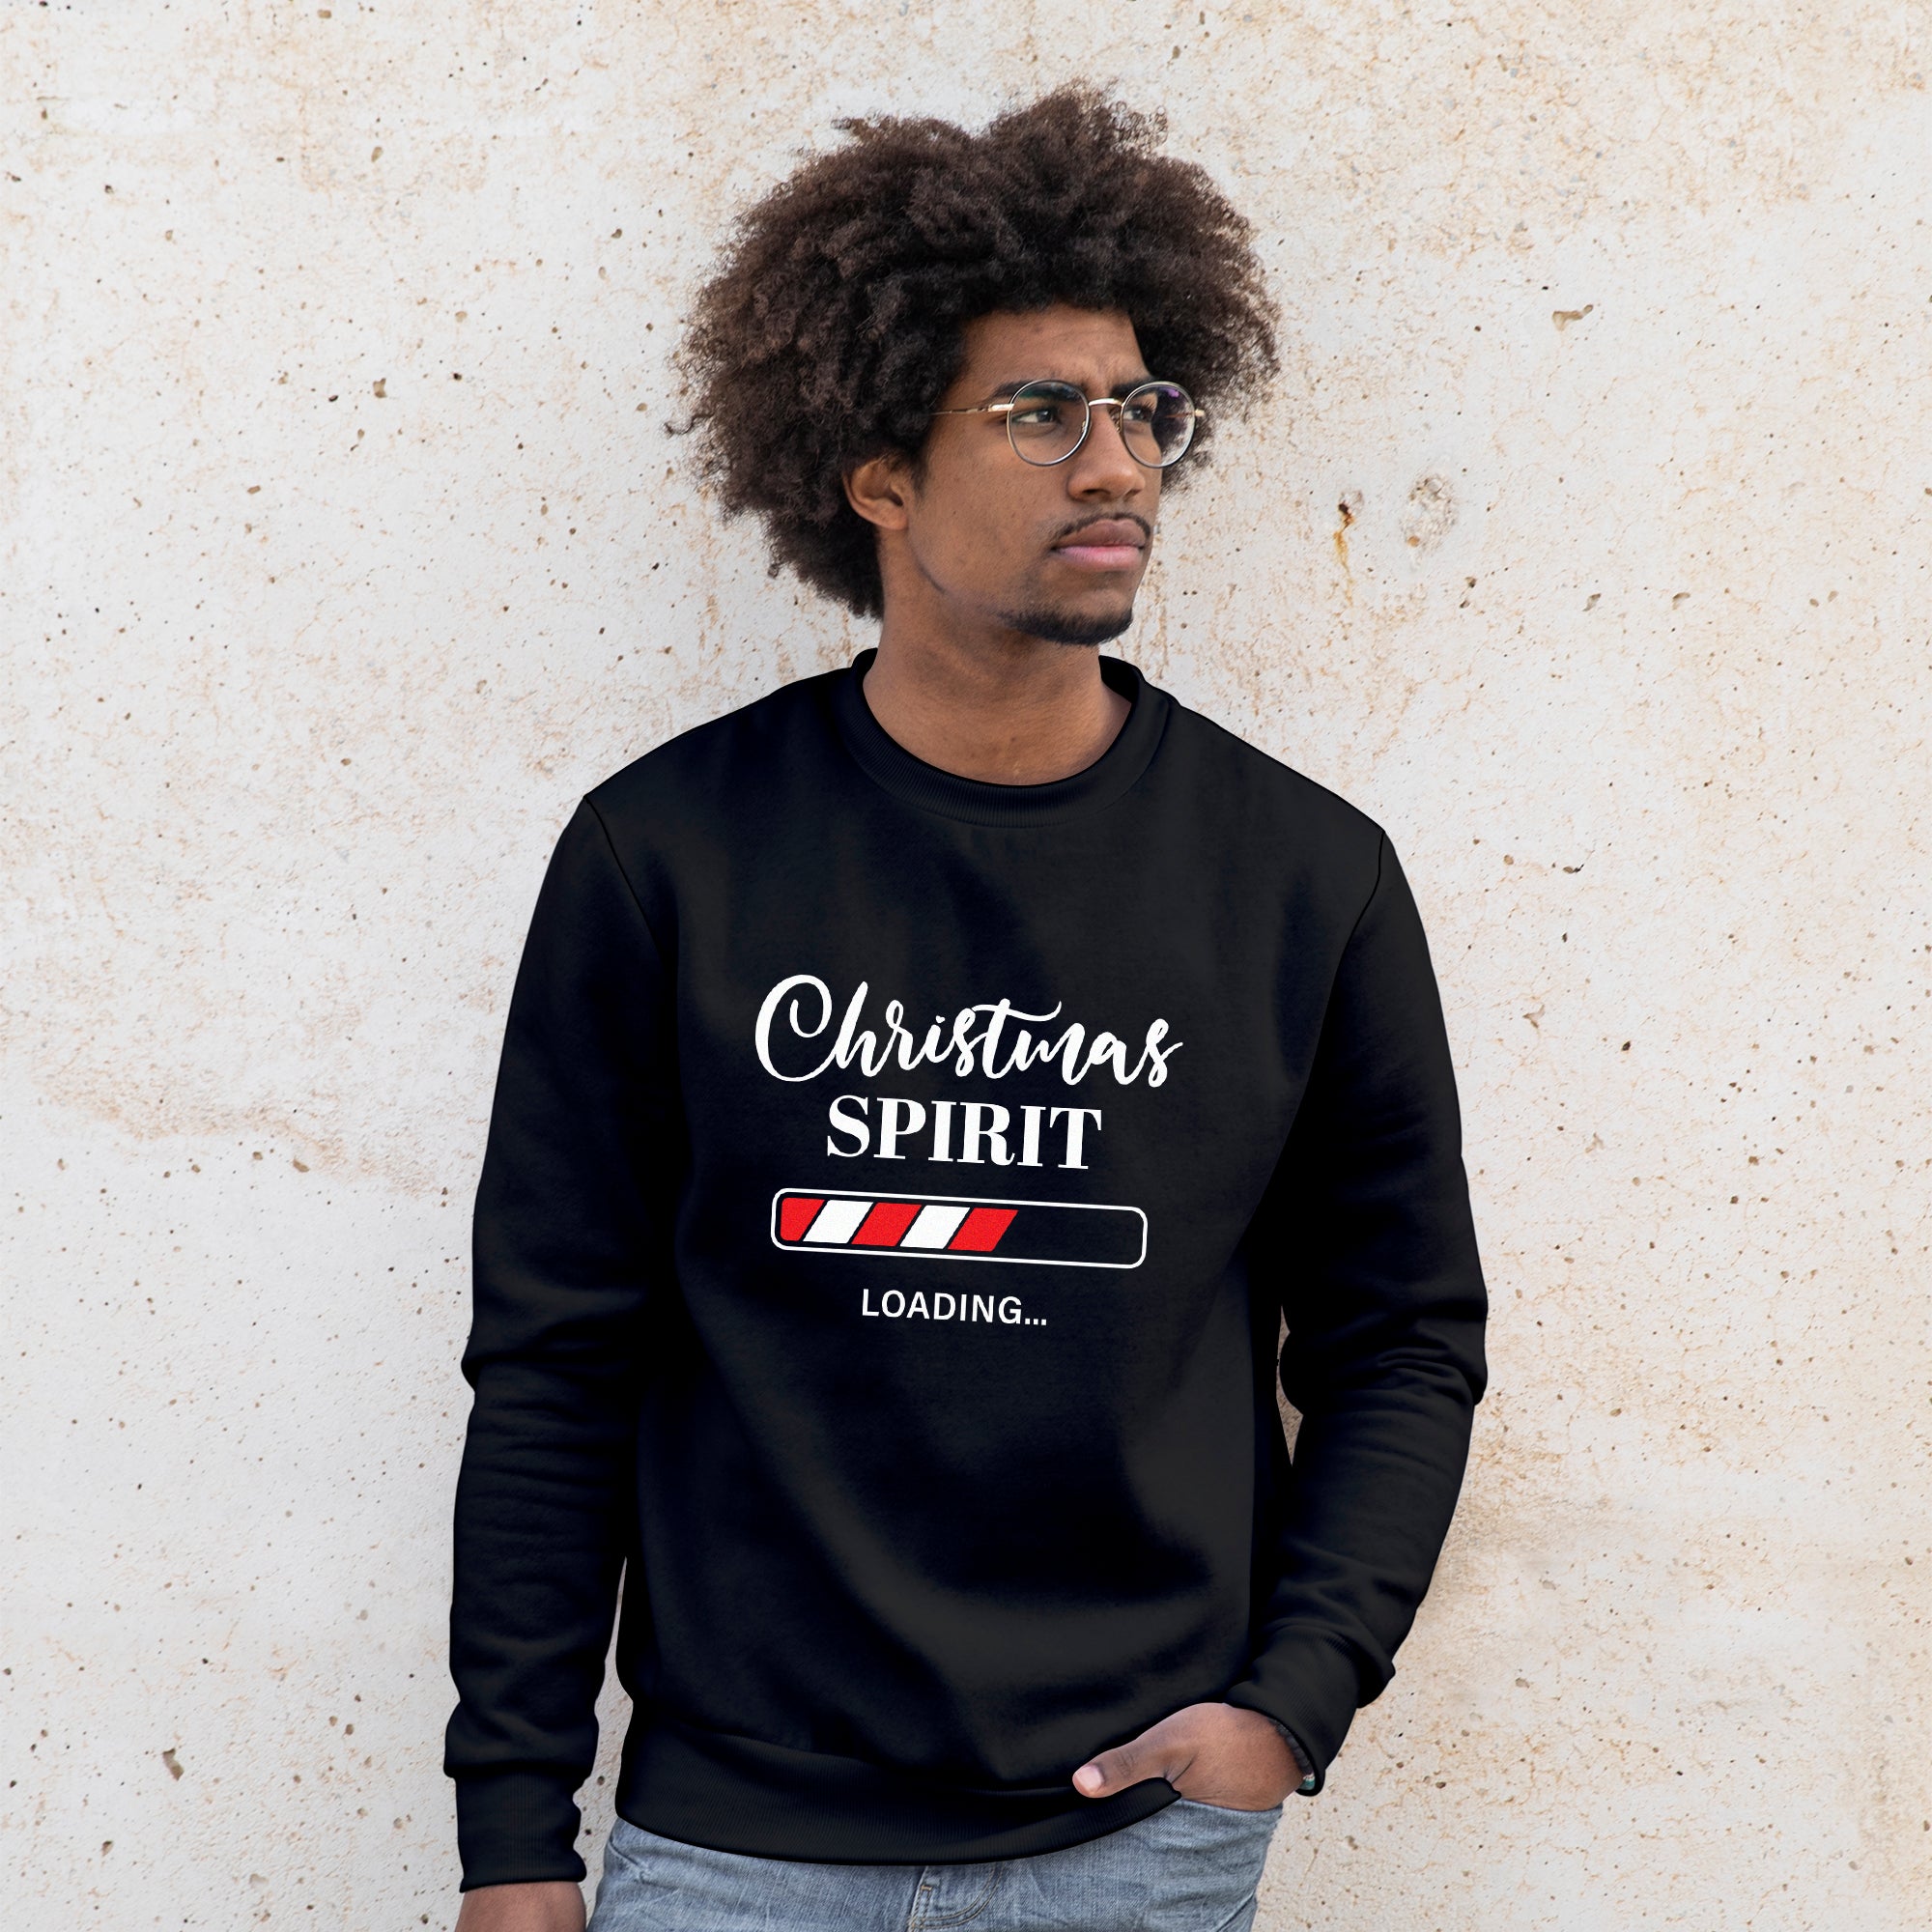 'Christmas Spirit Loading' Sweatshirt